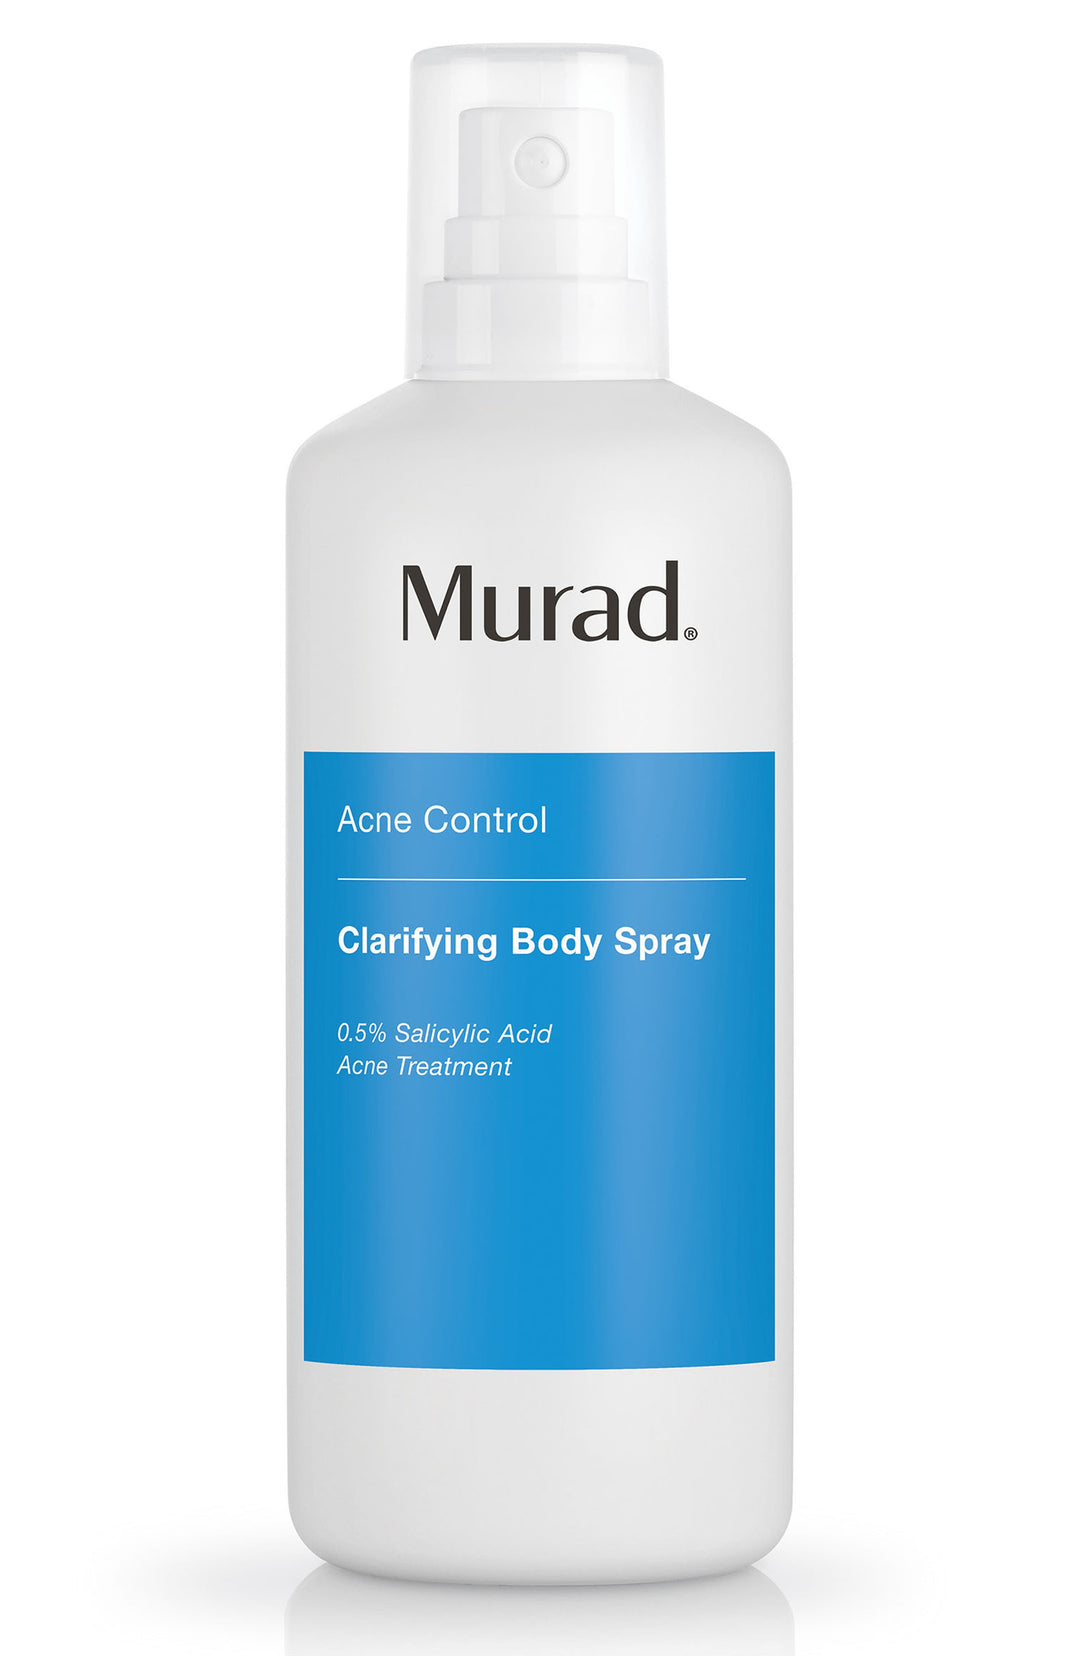 Murad Acne Clarifying Body Spray - 4.3 fl oz bottle